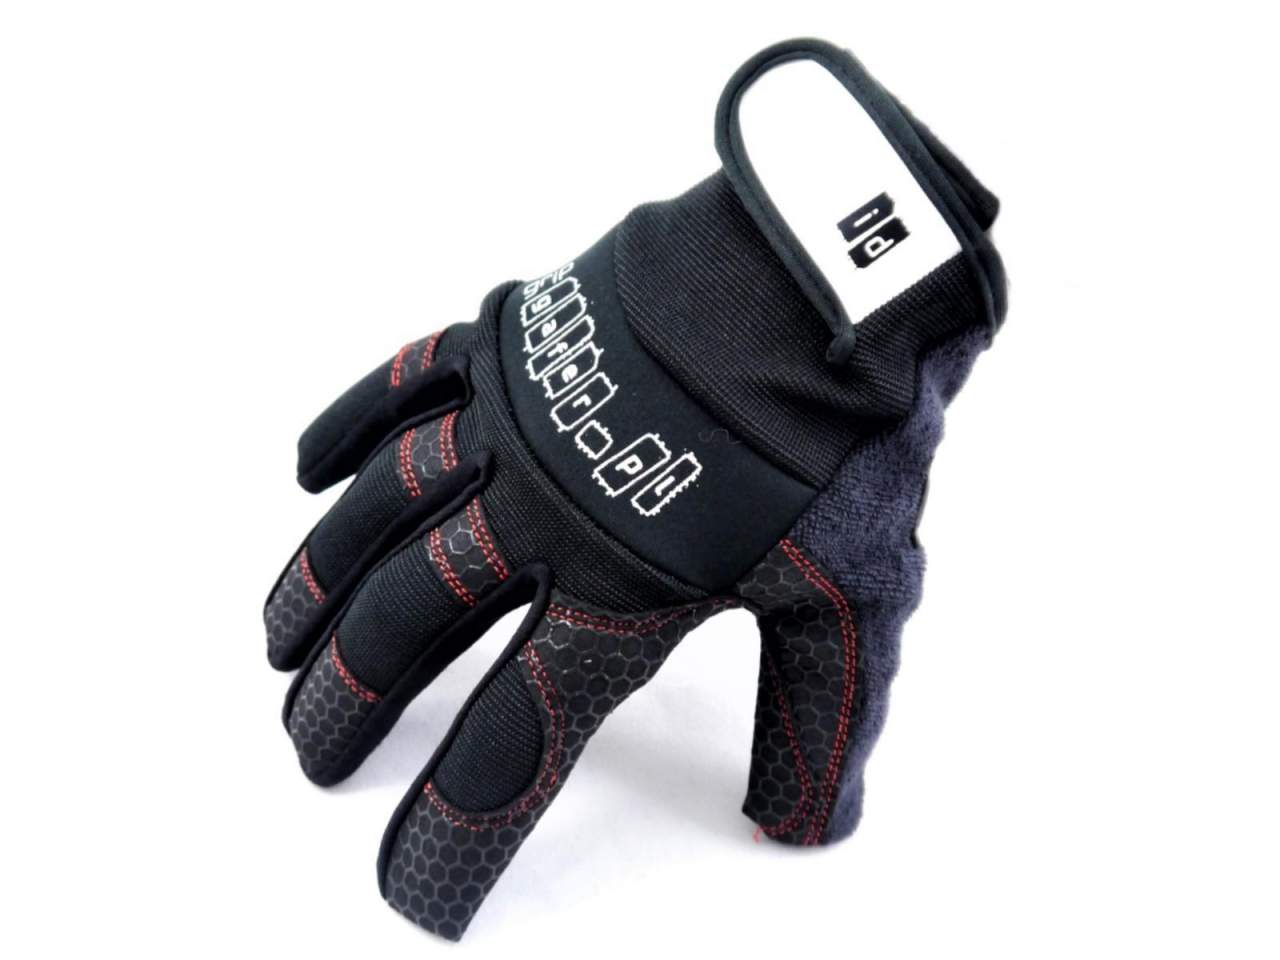 GAFER-PL Grip glove Handschuh- Grsse S